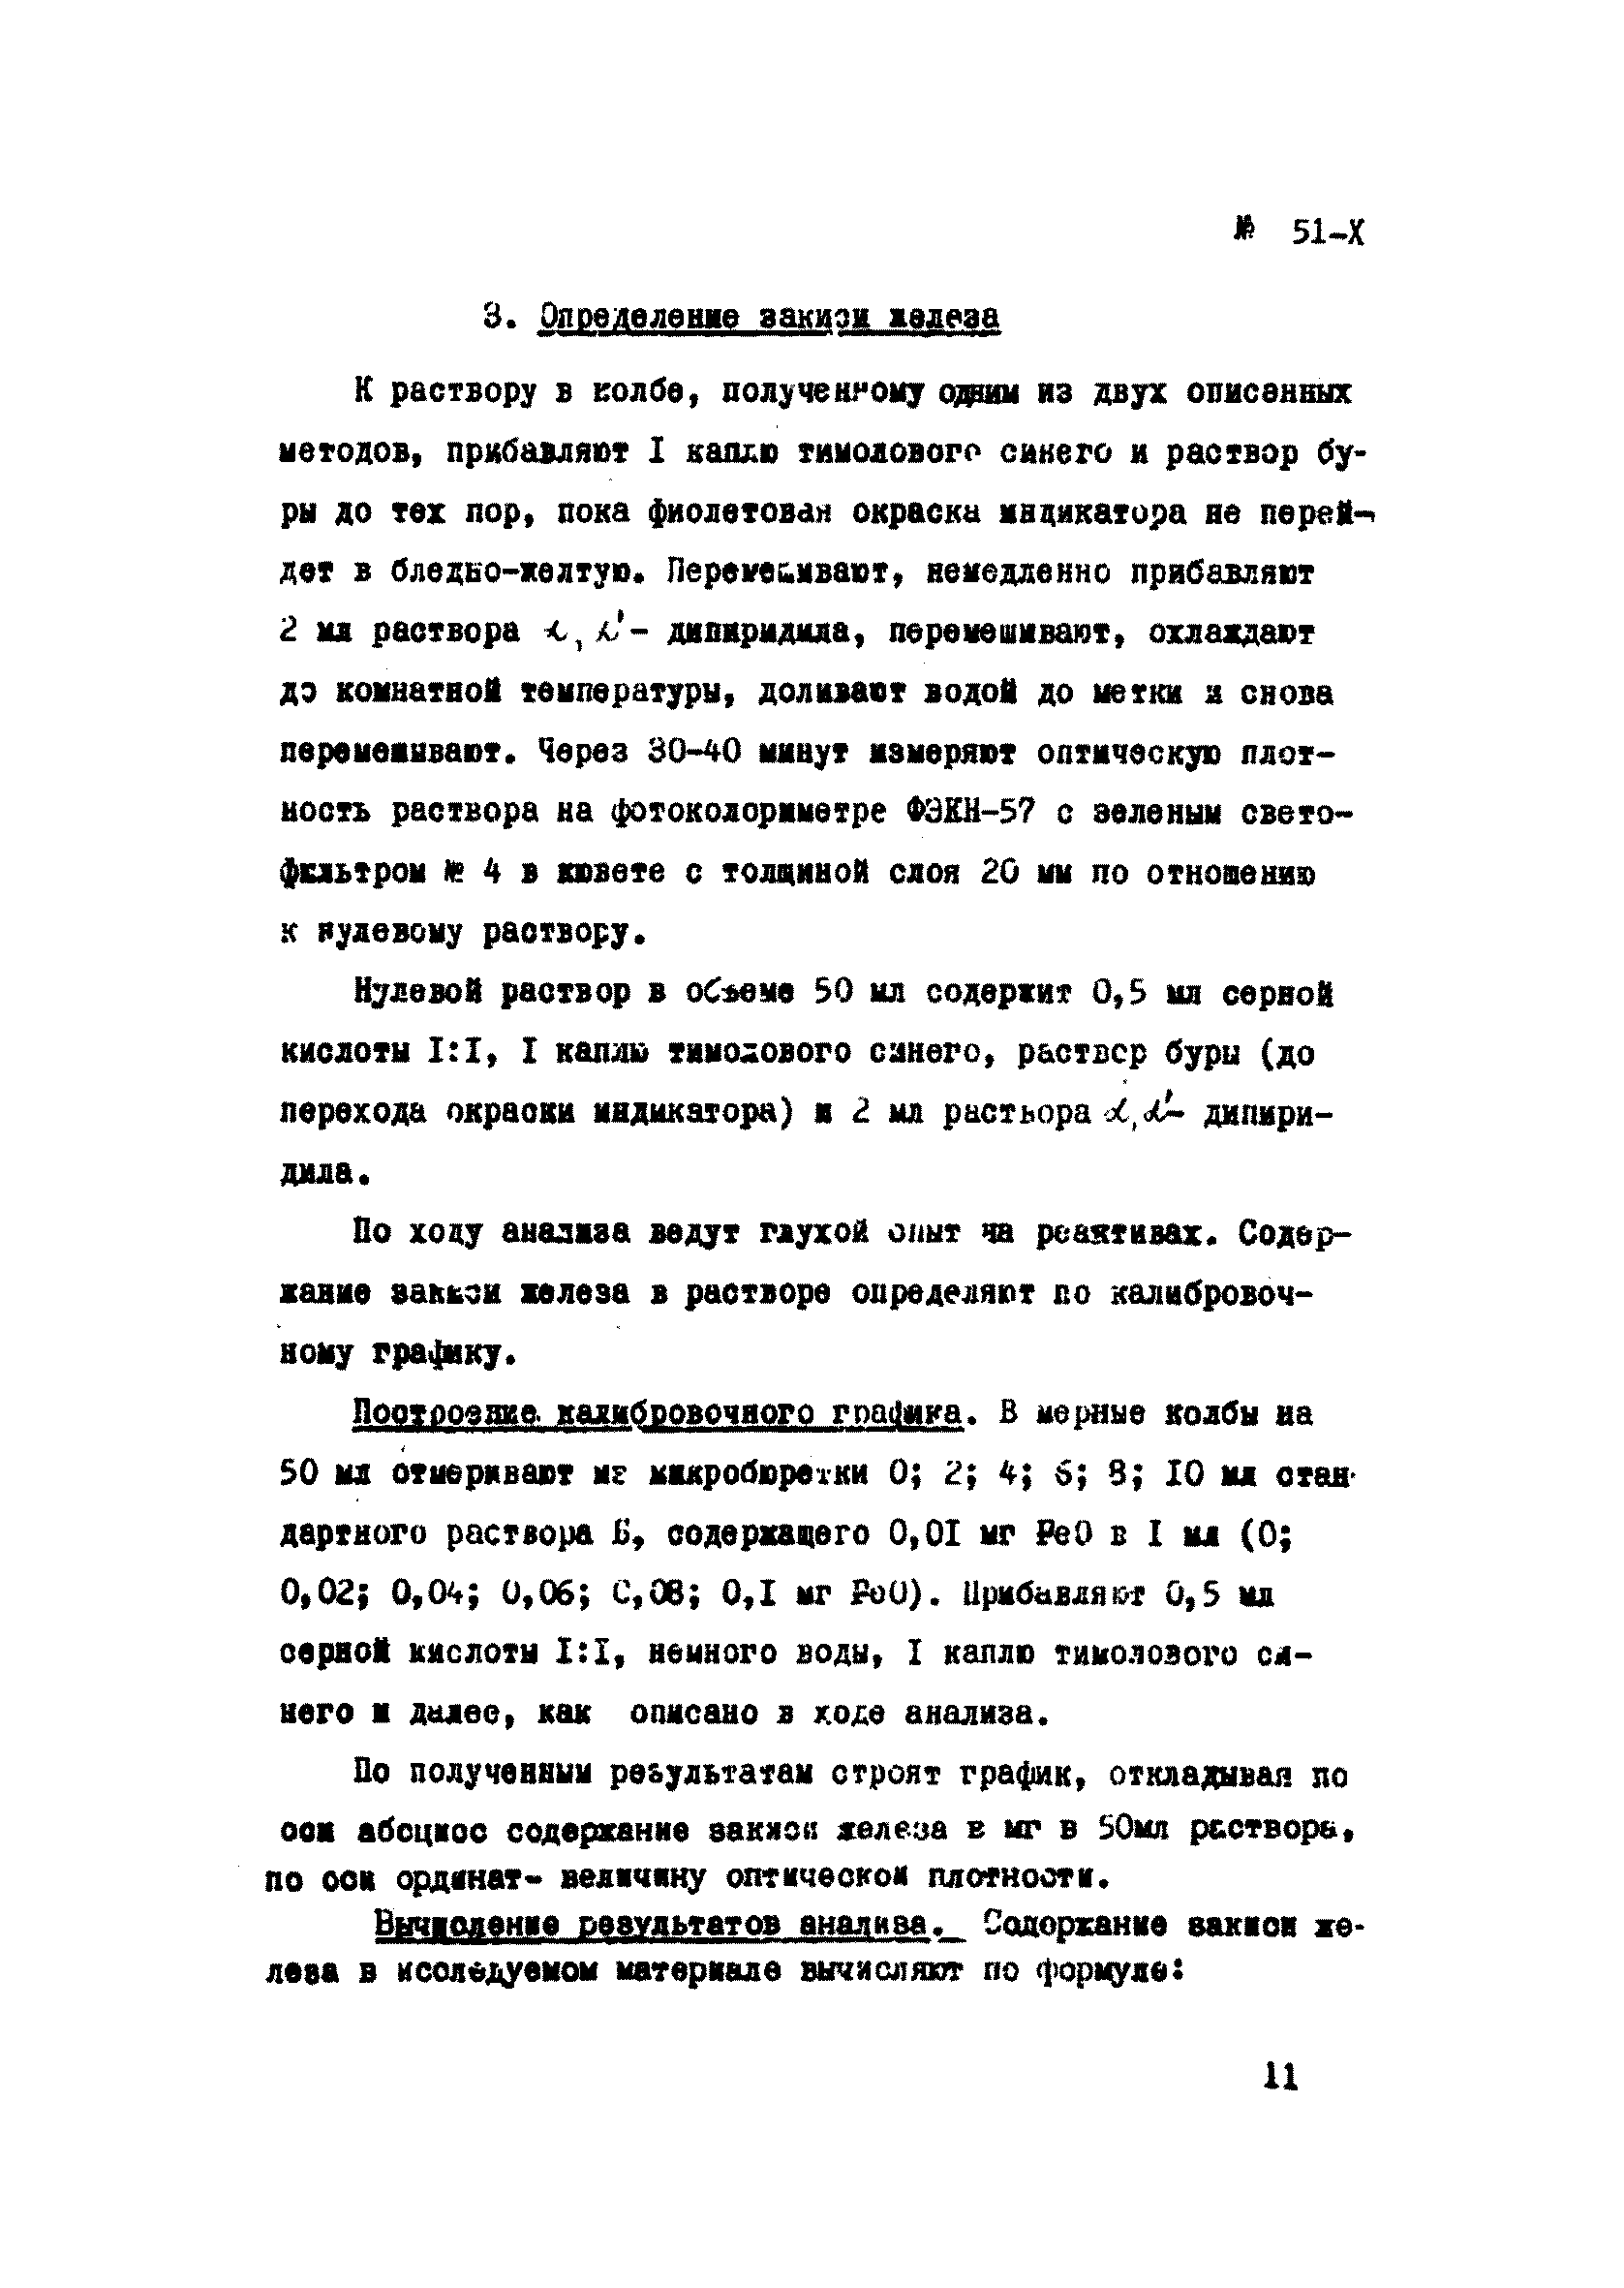 Инструкция НСАМ 51-Х